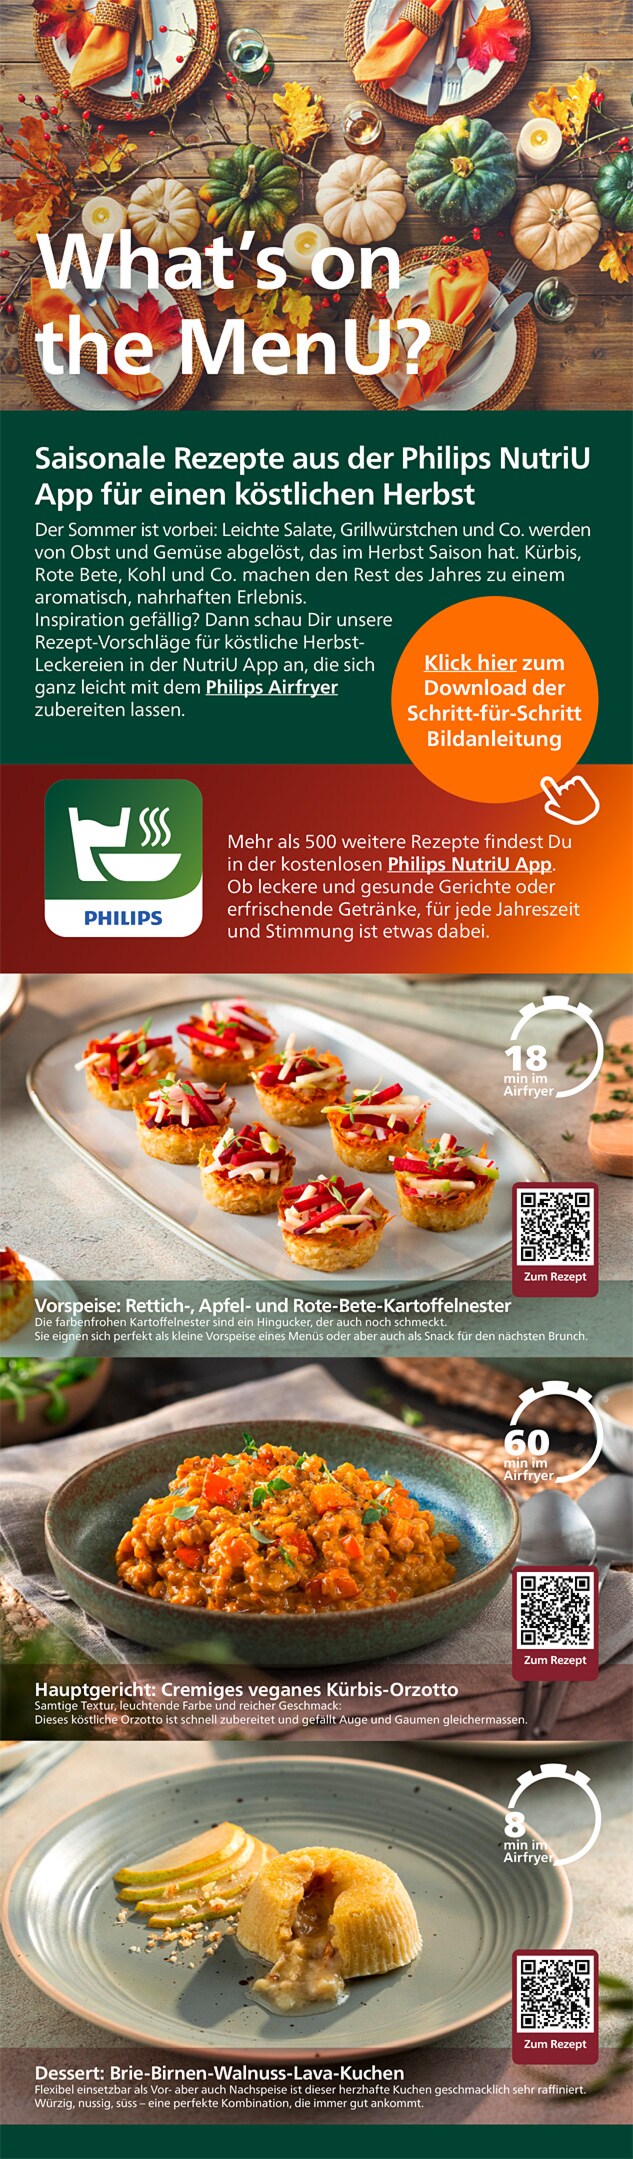 Philips Themensheet Kitchentalk